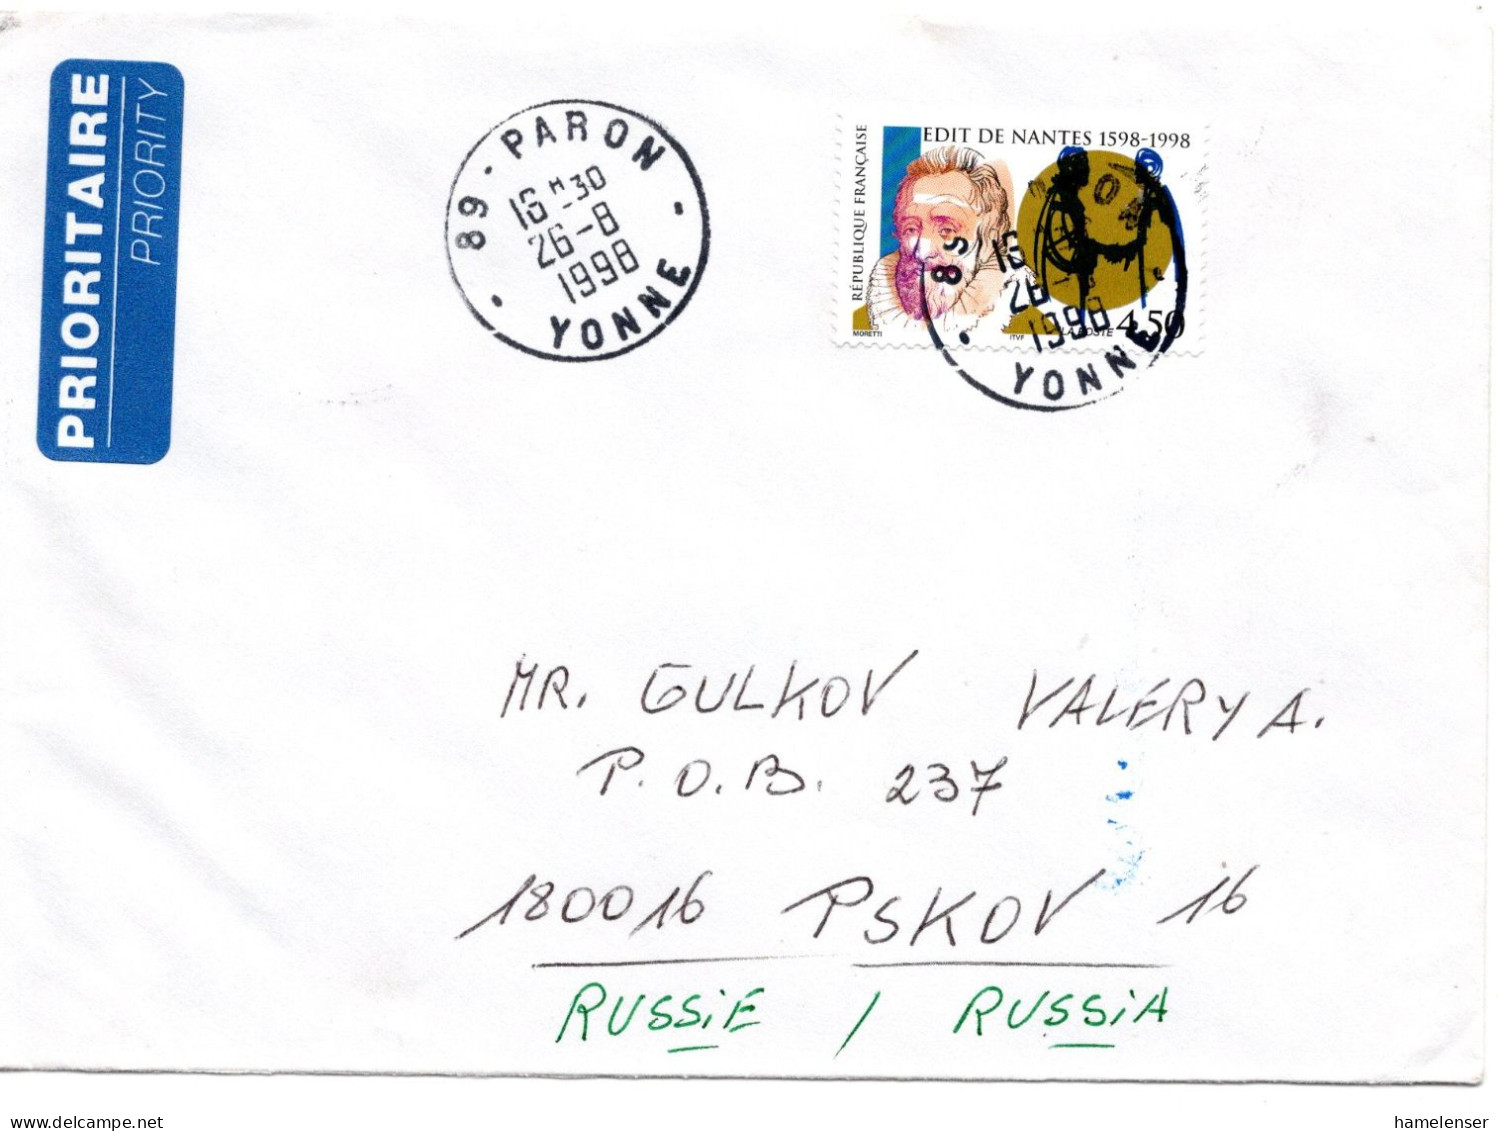 70905 - Frankreich - 1998 - 4,50F Edikt Von Nantes EF A LpBf PARON -> PSKOV (Russland) - Briefe U. Dokumente